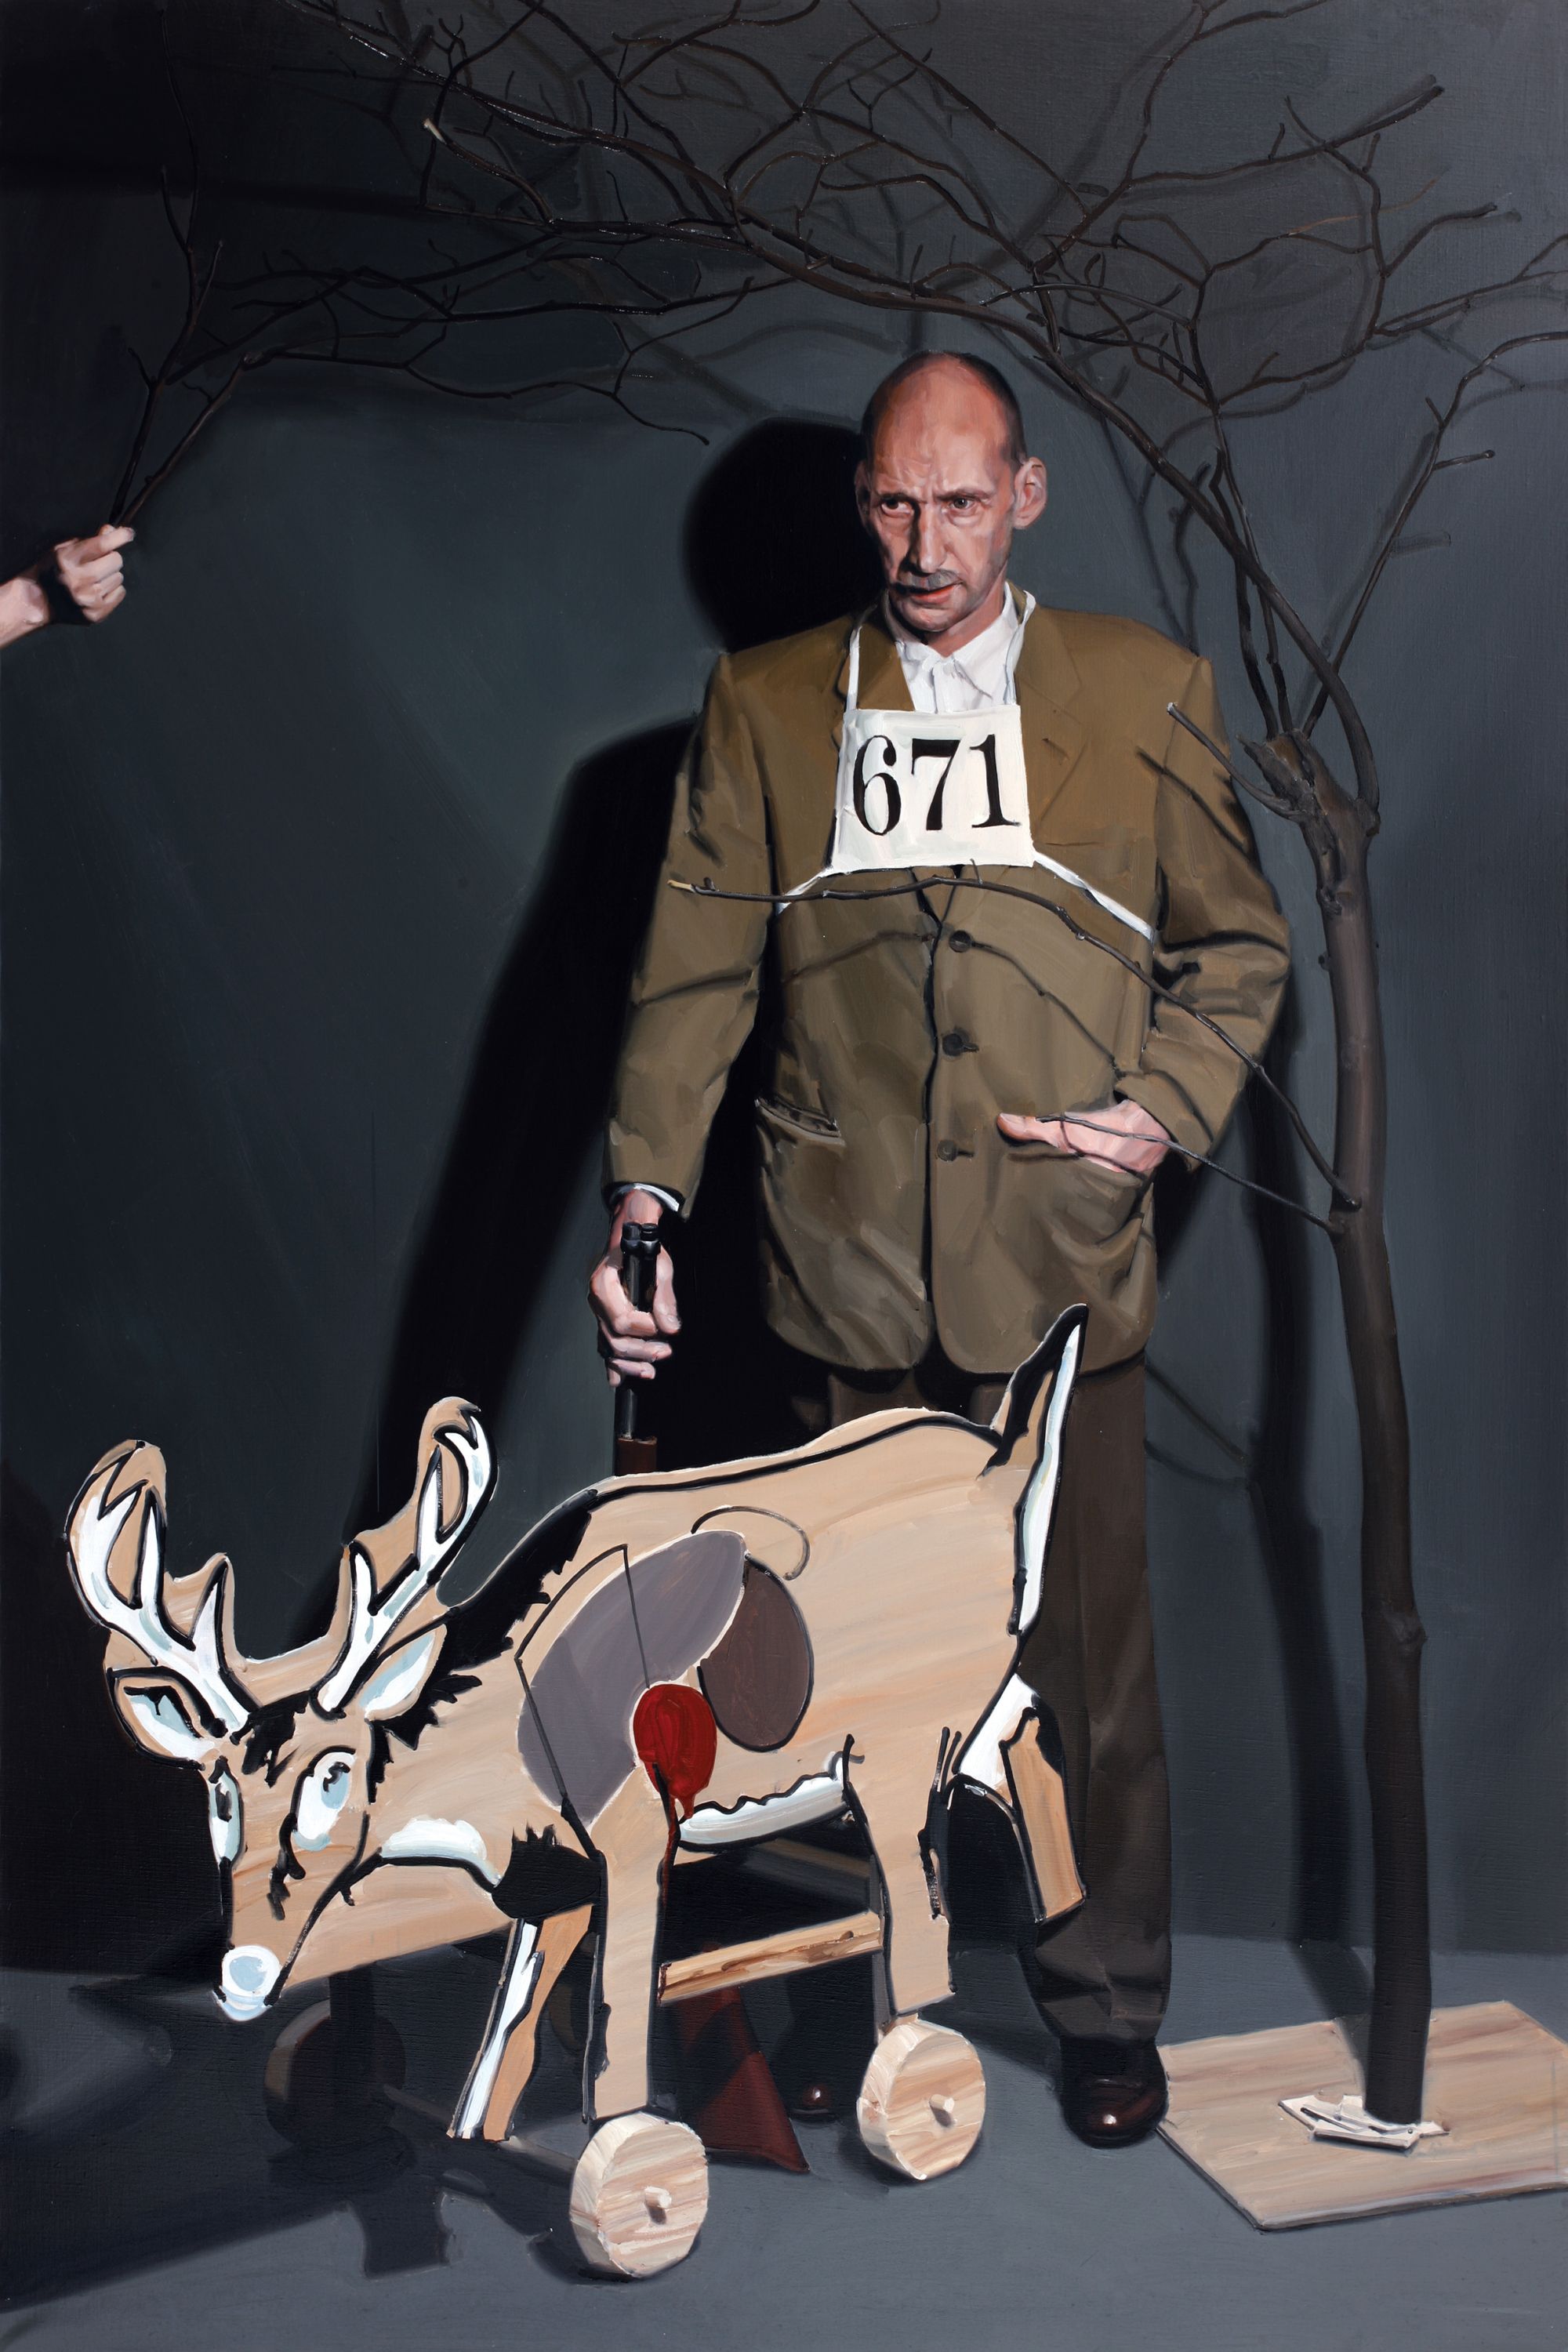 Running Deer Shooting, Chris Crick, 2010, oil on canvas, 193.9 x 130.3cm